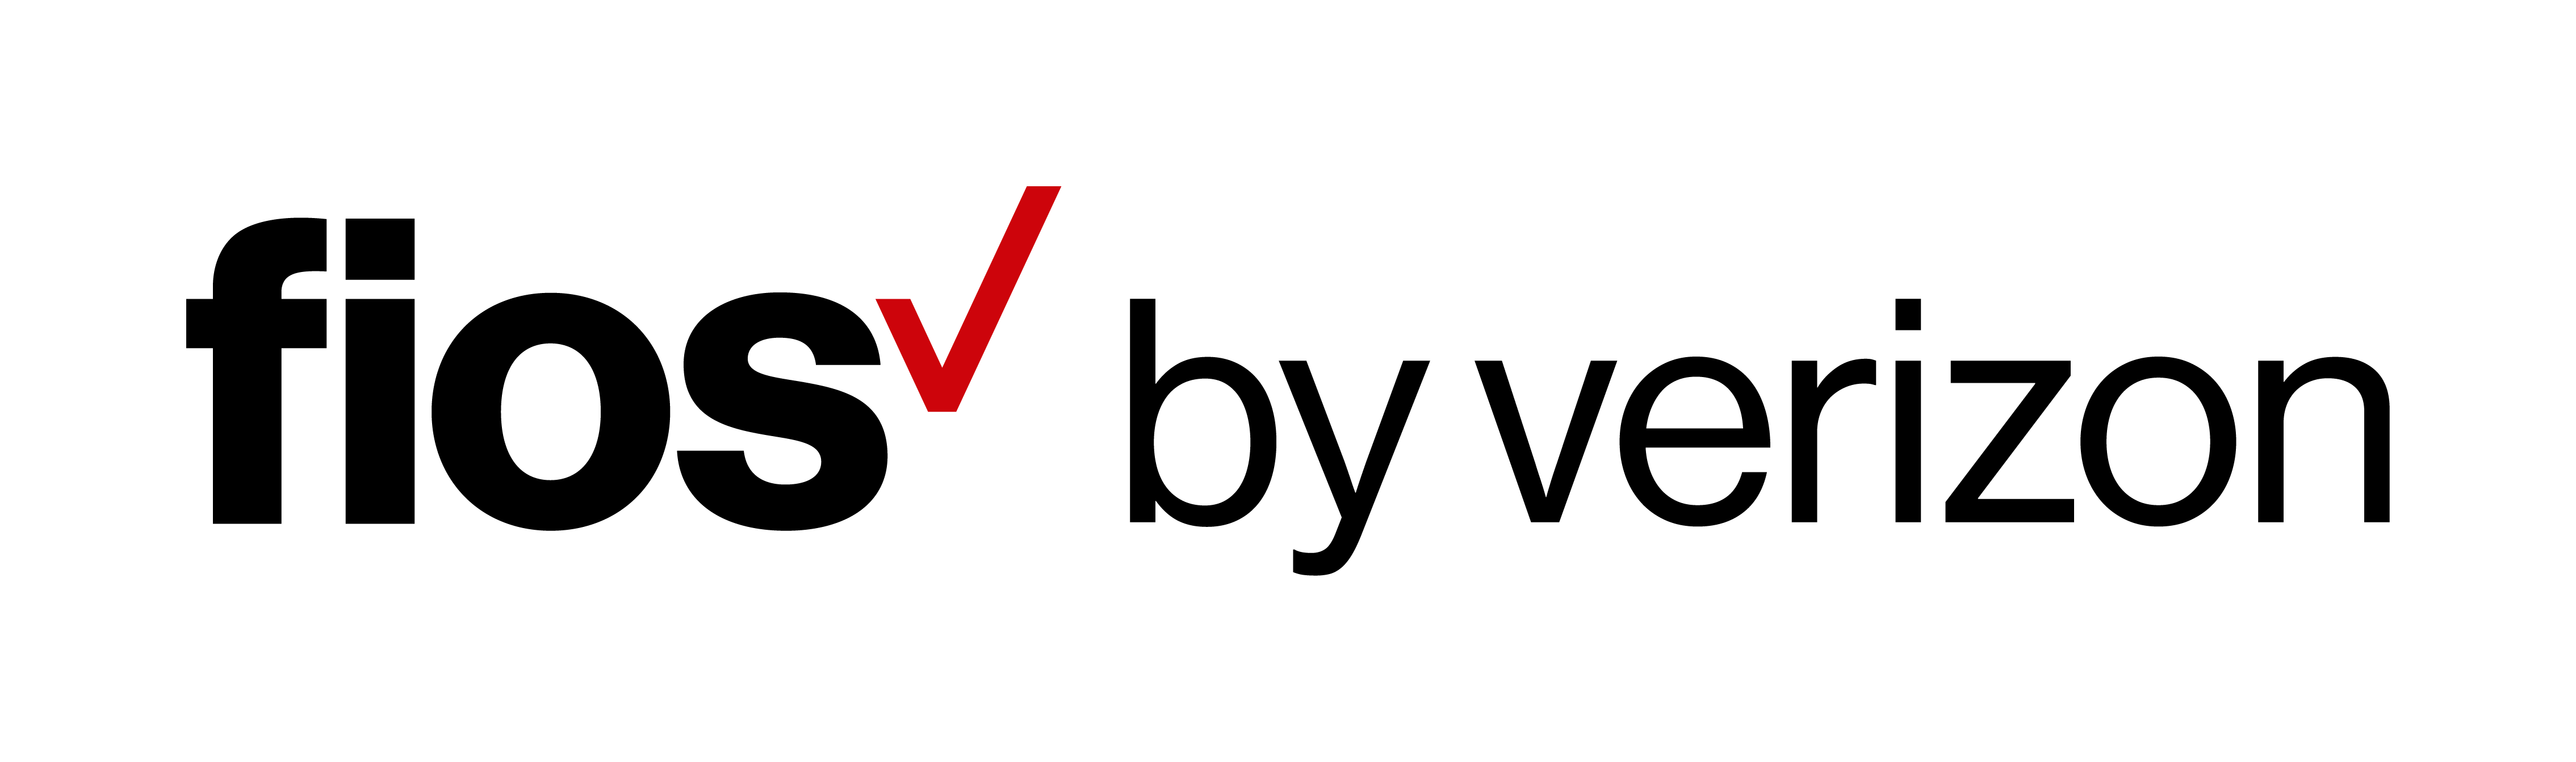 Verizon FiOS Logo - Media Resources | About Verizon